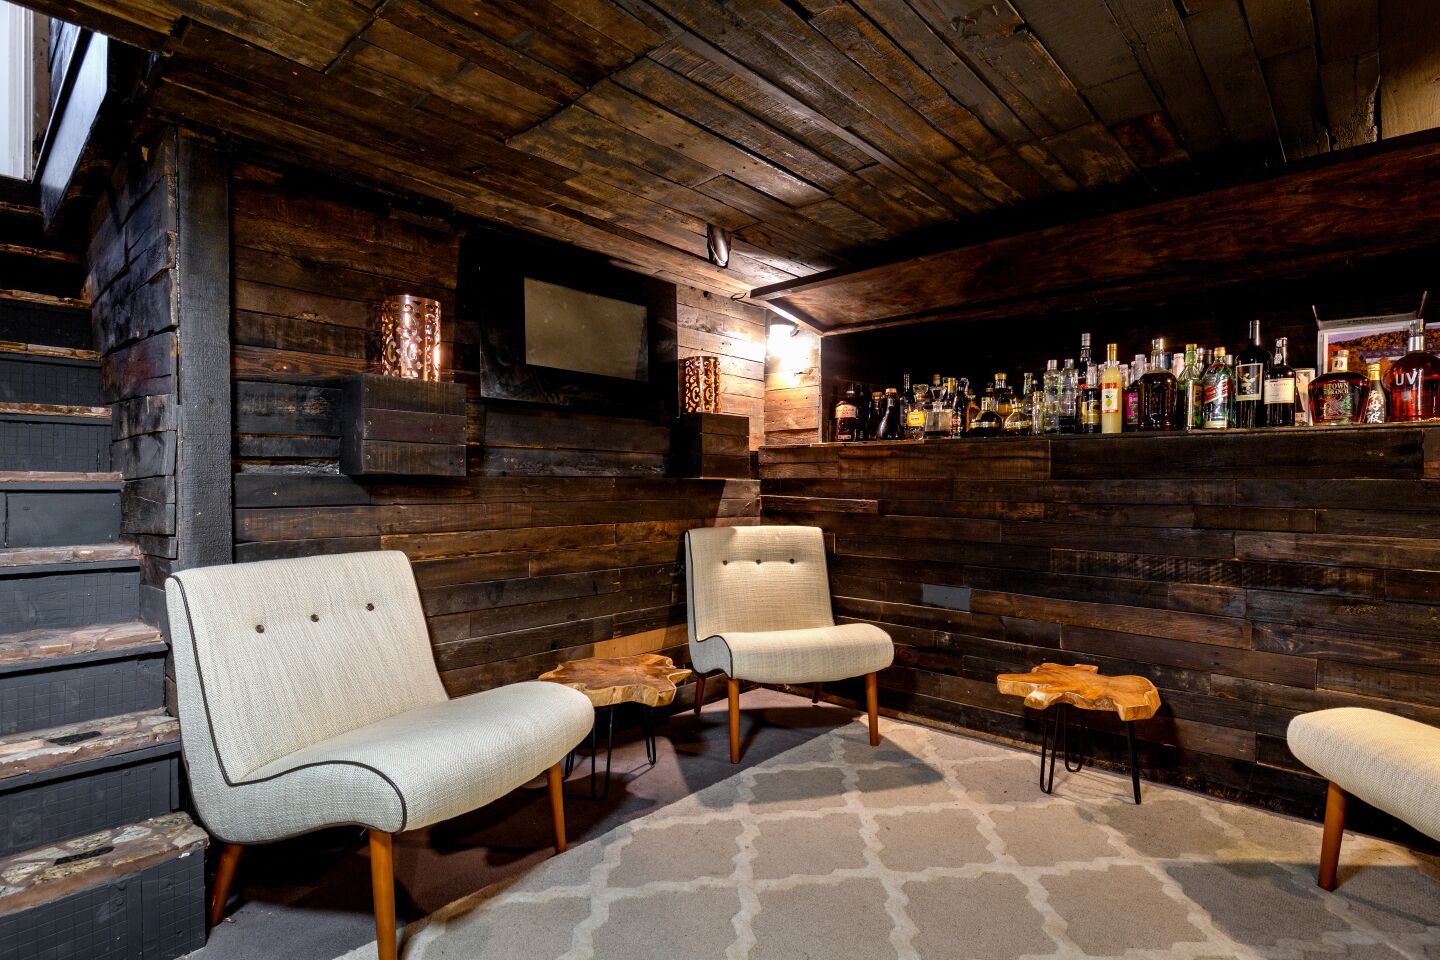 The basement has been reimagined as a bar.